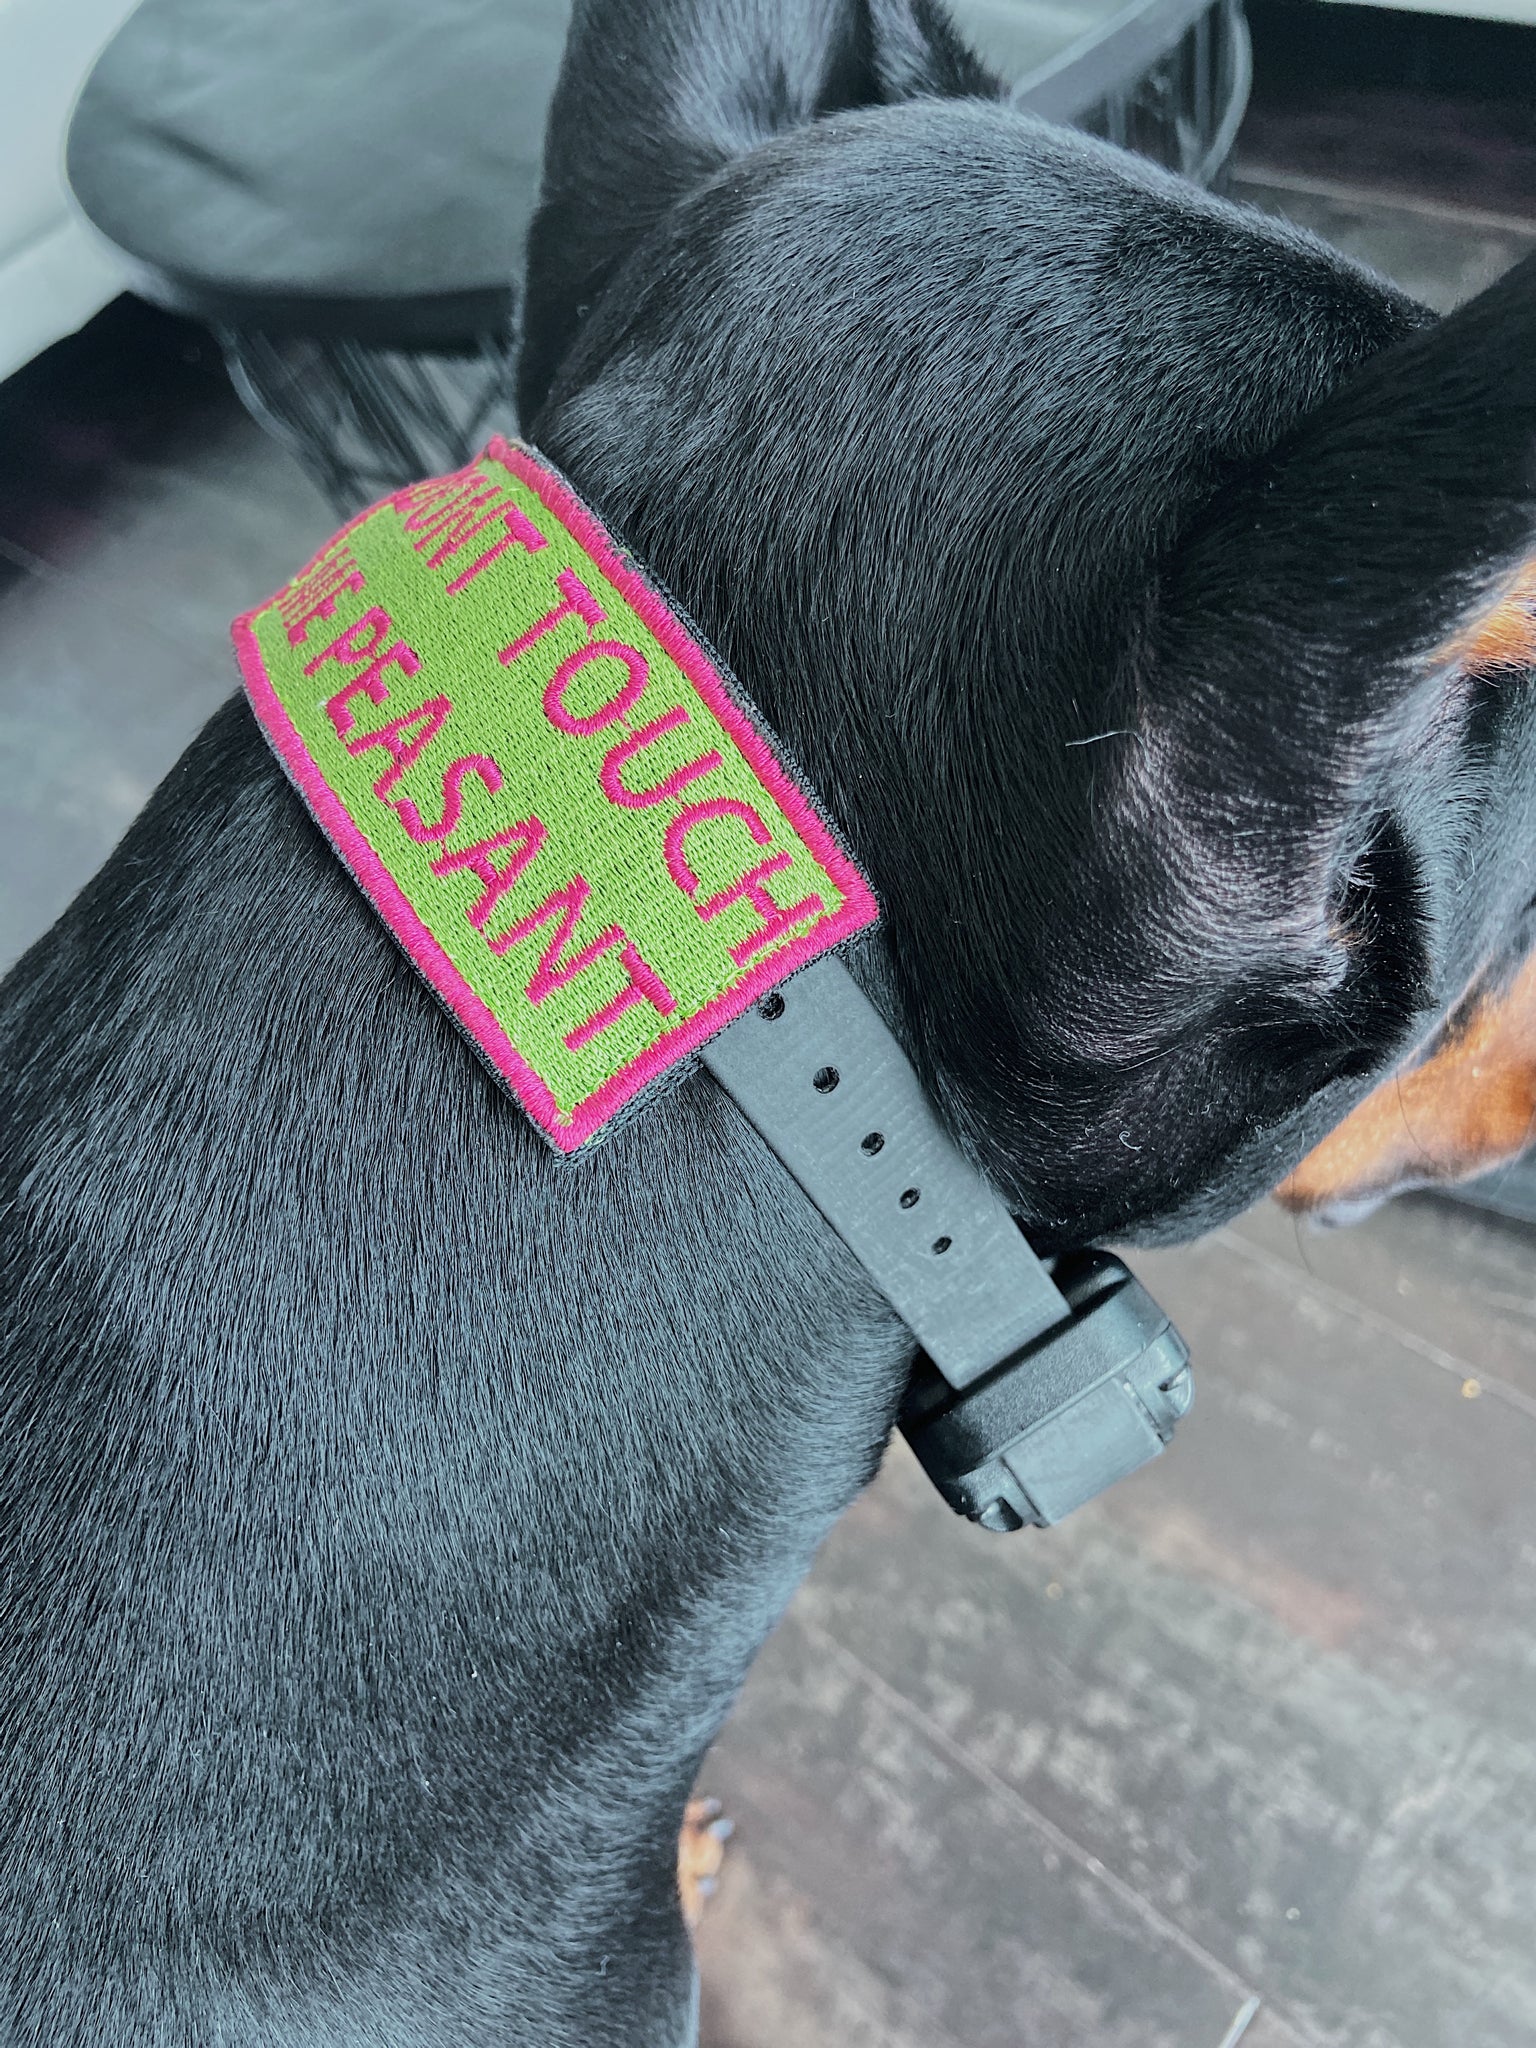 DO NOT PET” Velcro Patches – Ridgeside K9 Dog Training Supplies